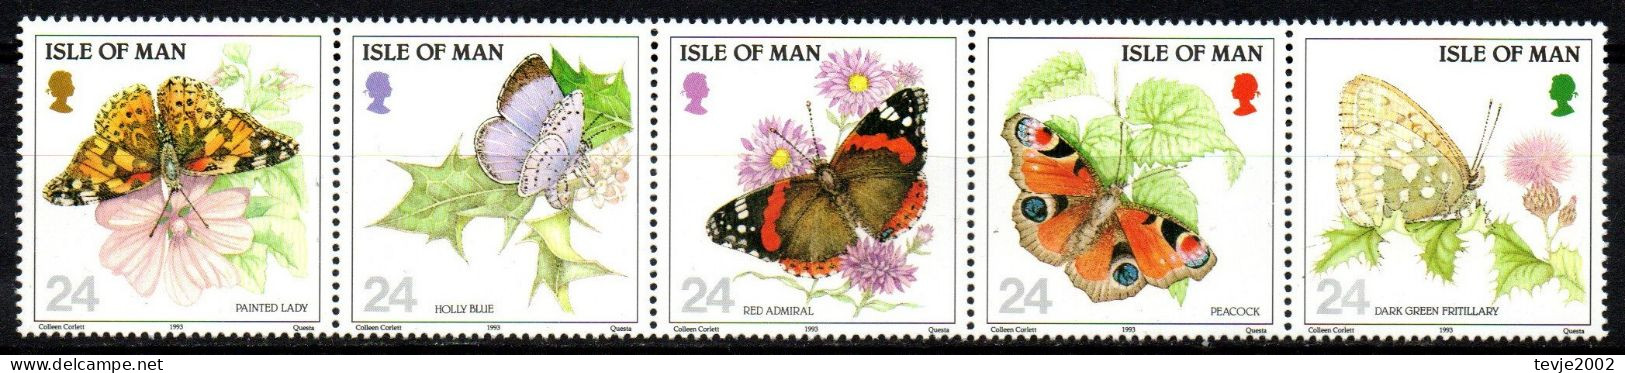 Isle Of Man 1993 - Mi.Nr. 555 - 559 - Postfrisch MNH - Tiere Animals Schmetterlinge Butterflies - Farfalle